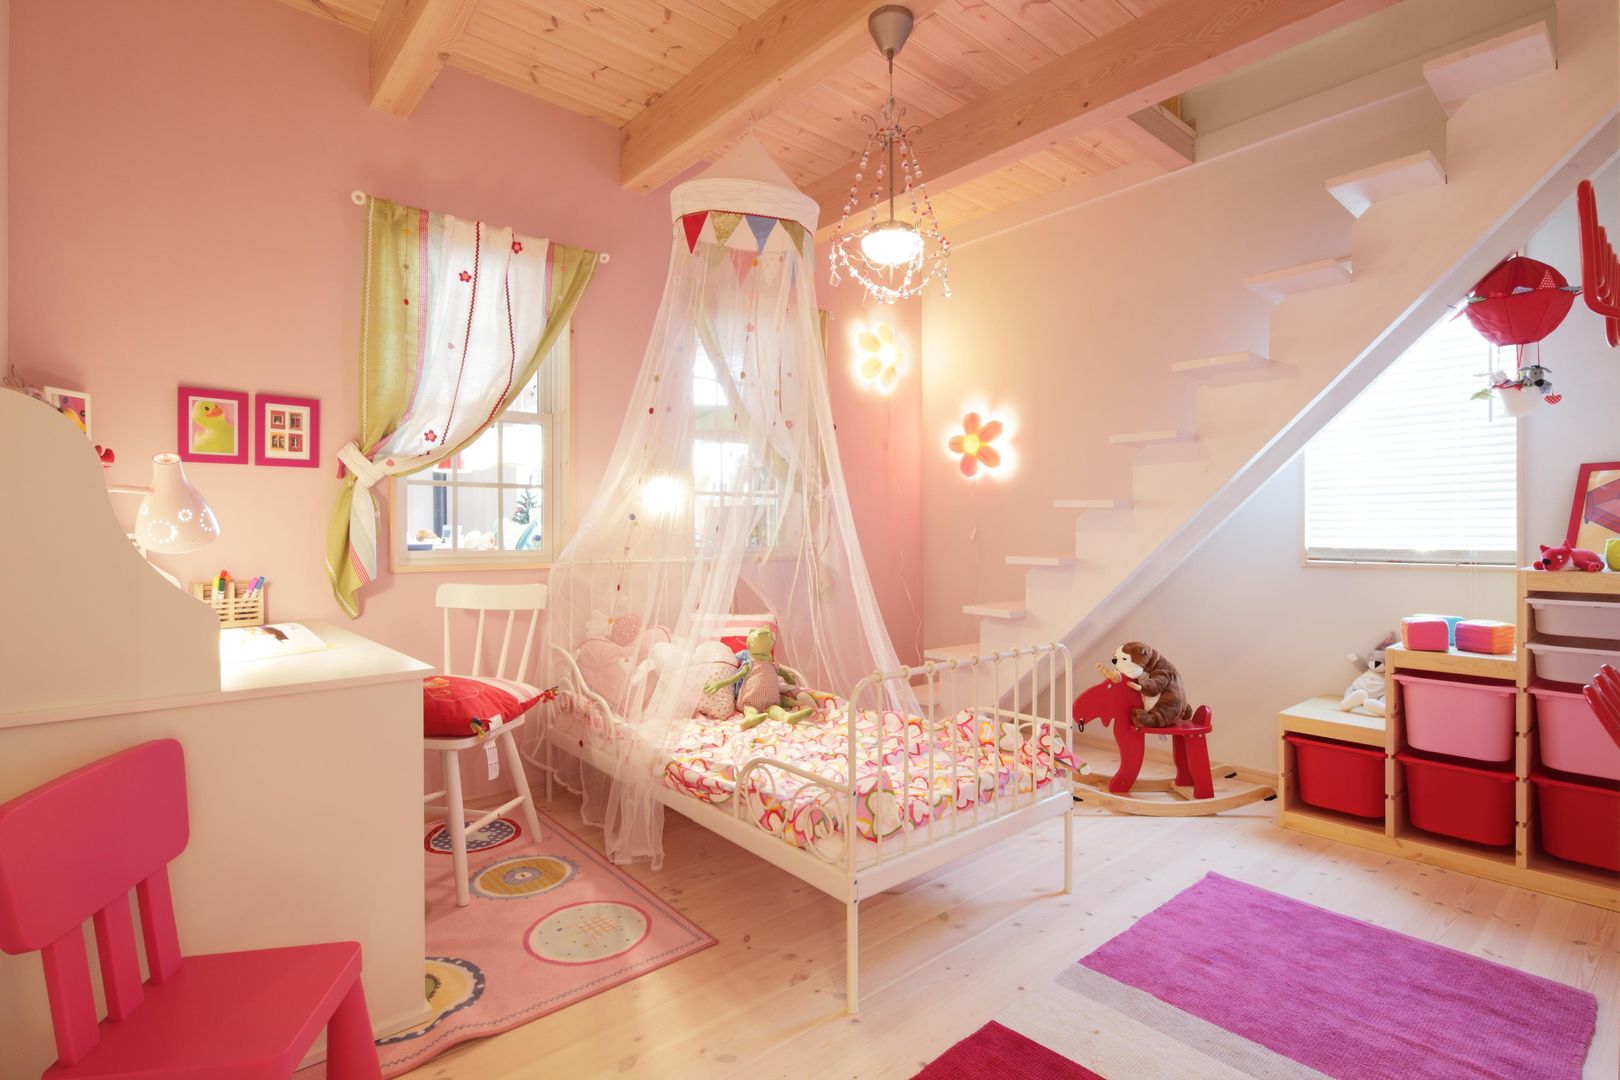 D`s HOUSE, dwarf dwarf غرفة الاطفال